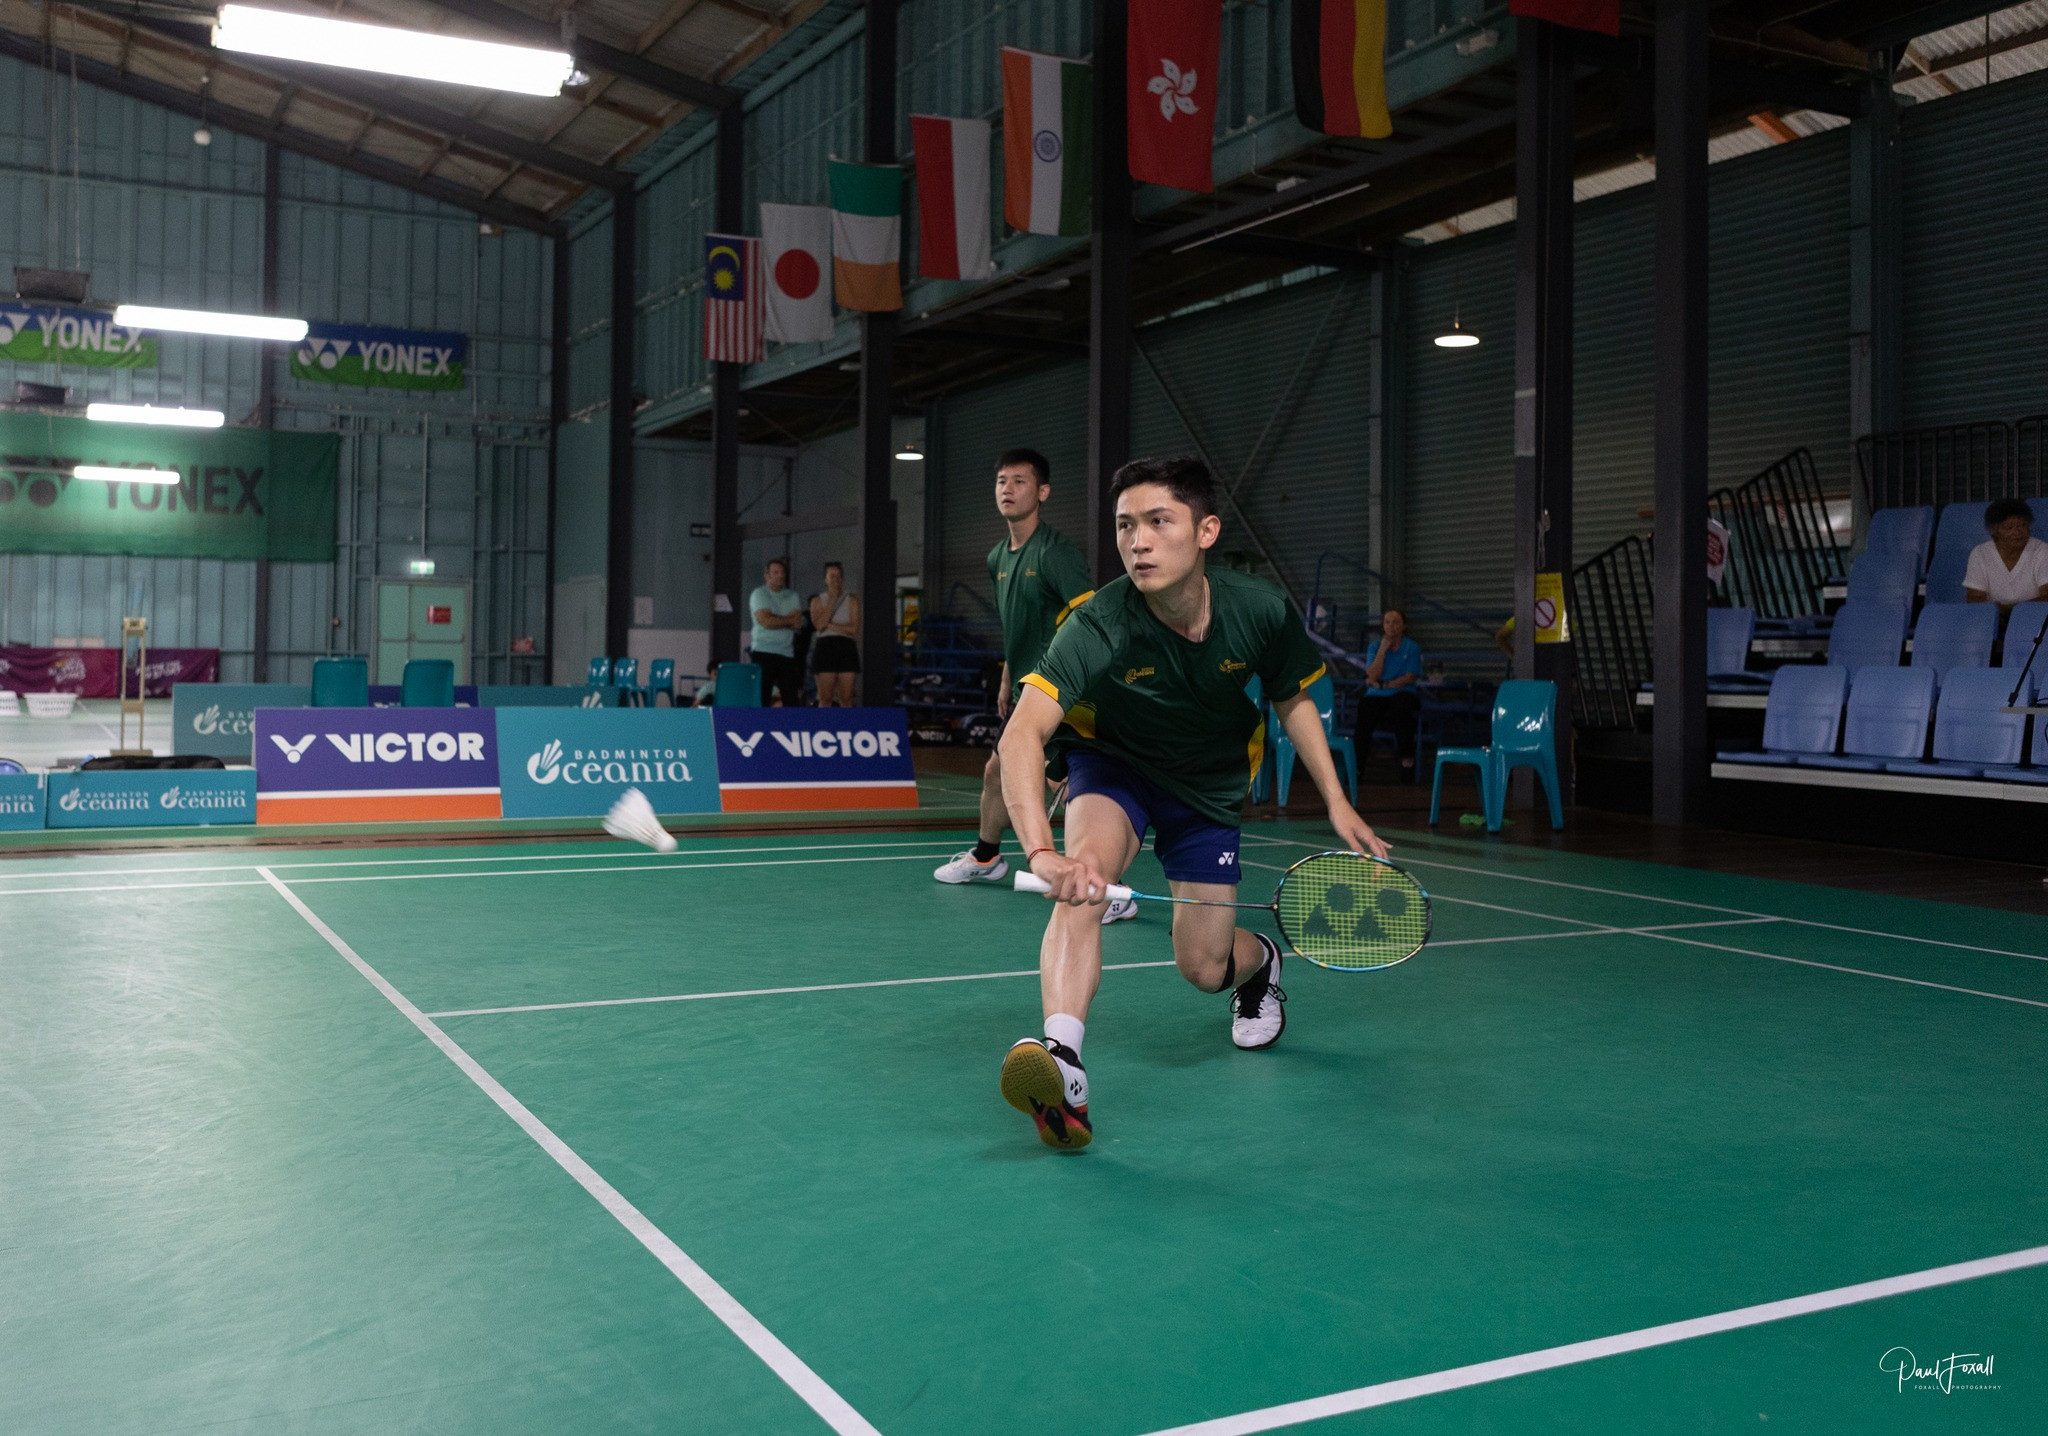 Australia and New Zealand set up grand slam finish at Oceania Badminton Championships